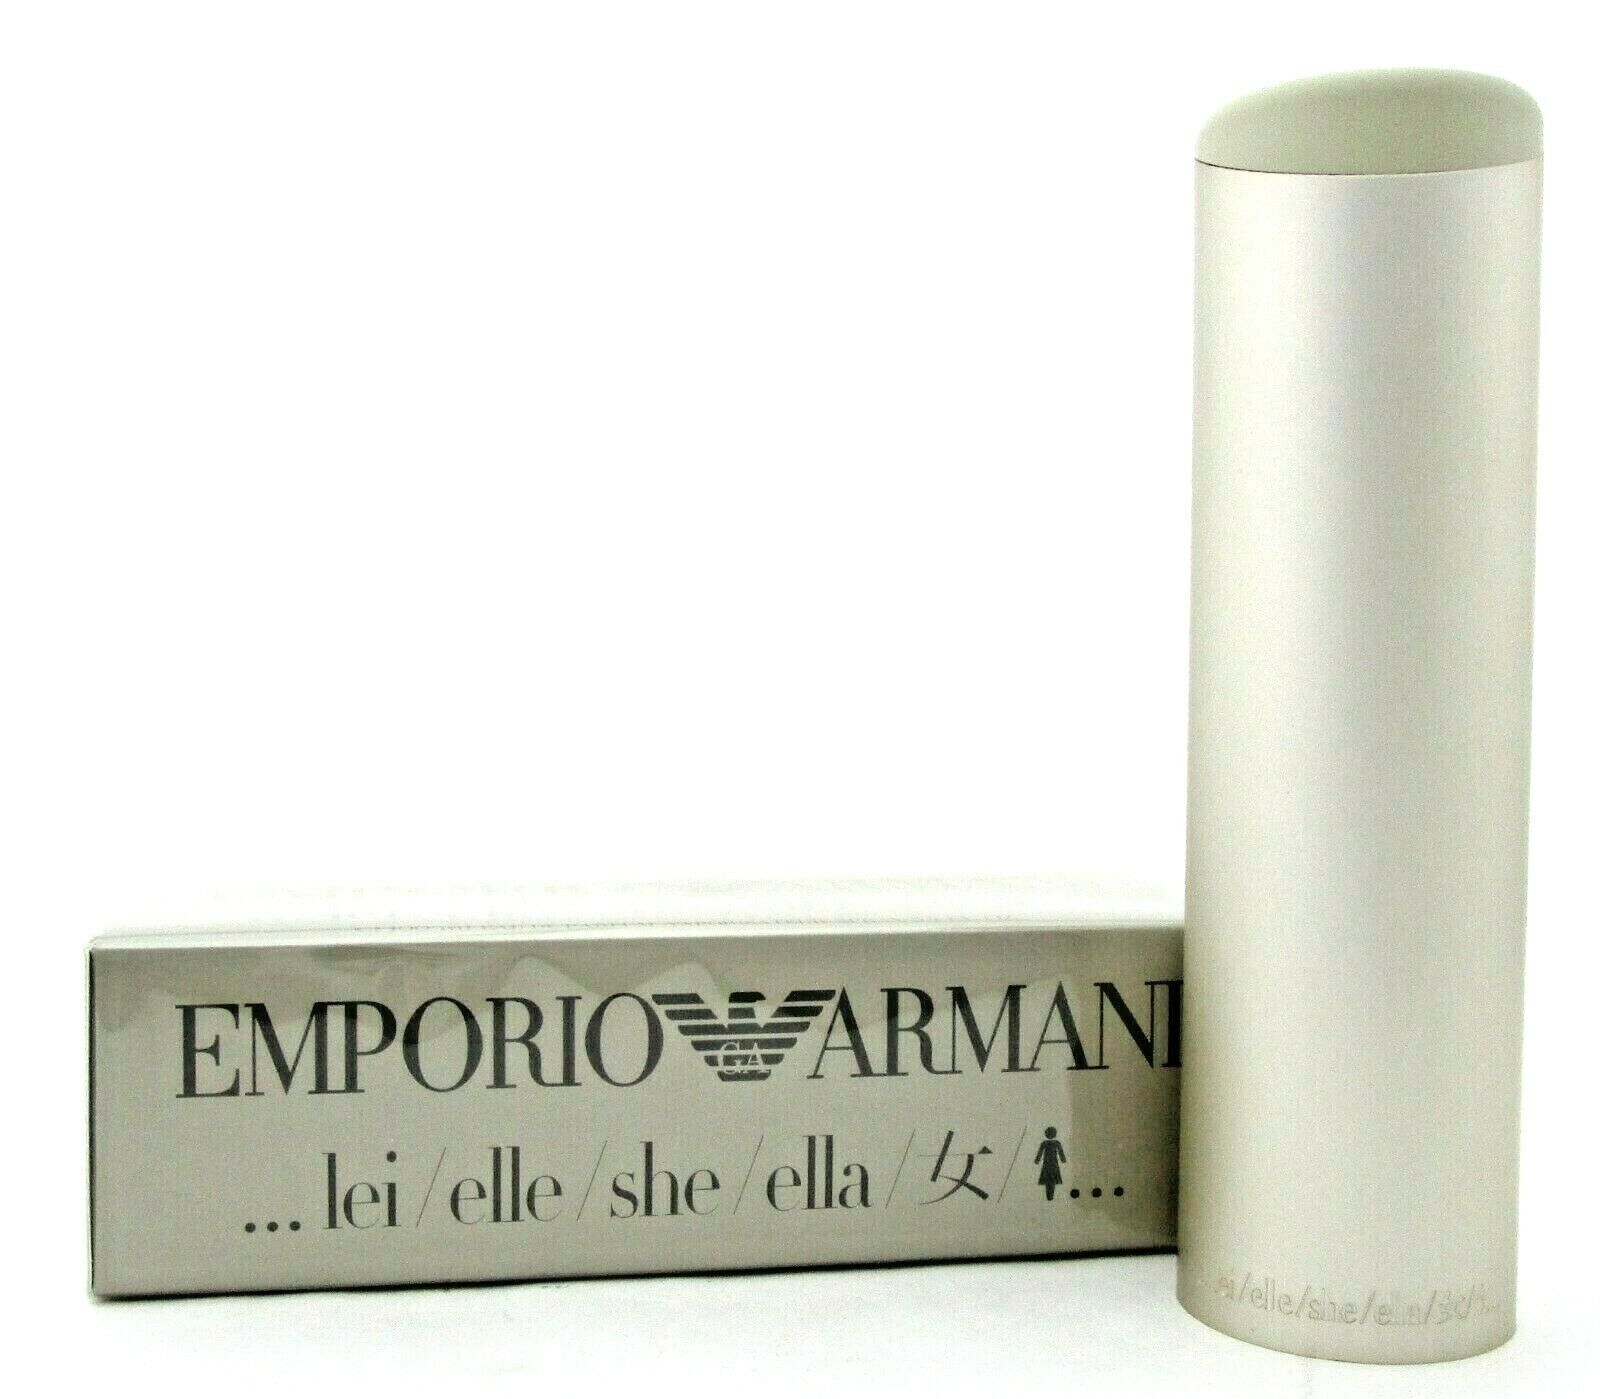 Emporio Armani SHE by Giorgio Armani 3.4 oz. EDP Spray for Women. New Sealed Box Emporio Armani - фотография #4